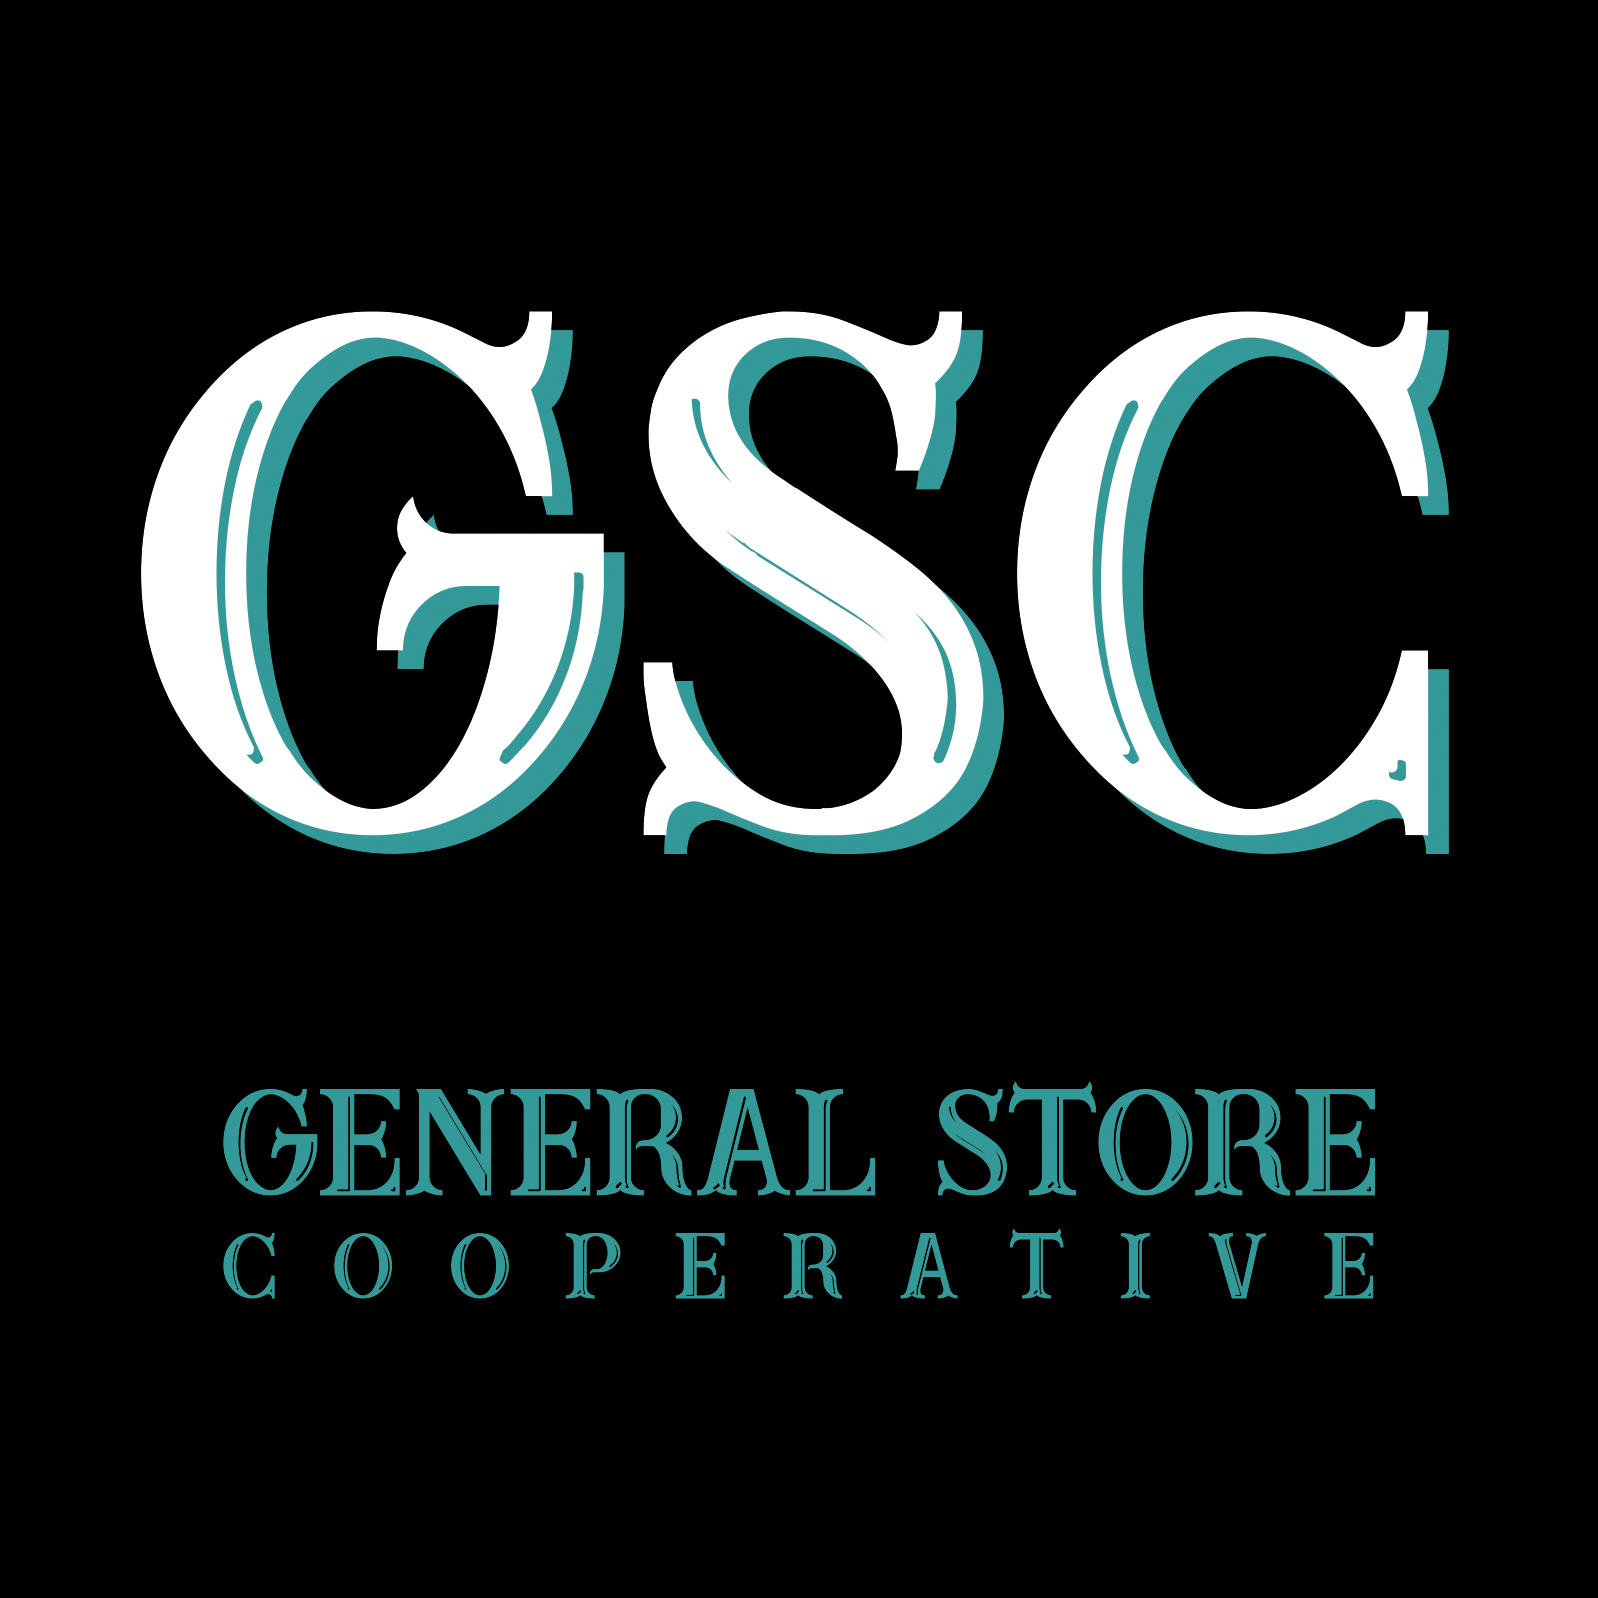 General Store Cooperative